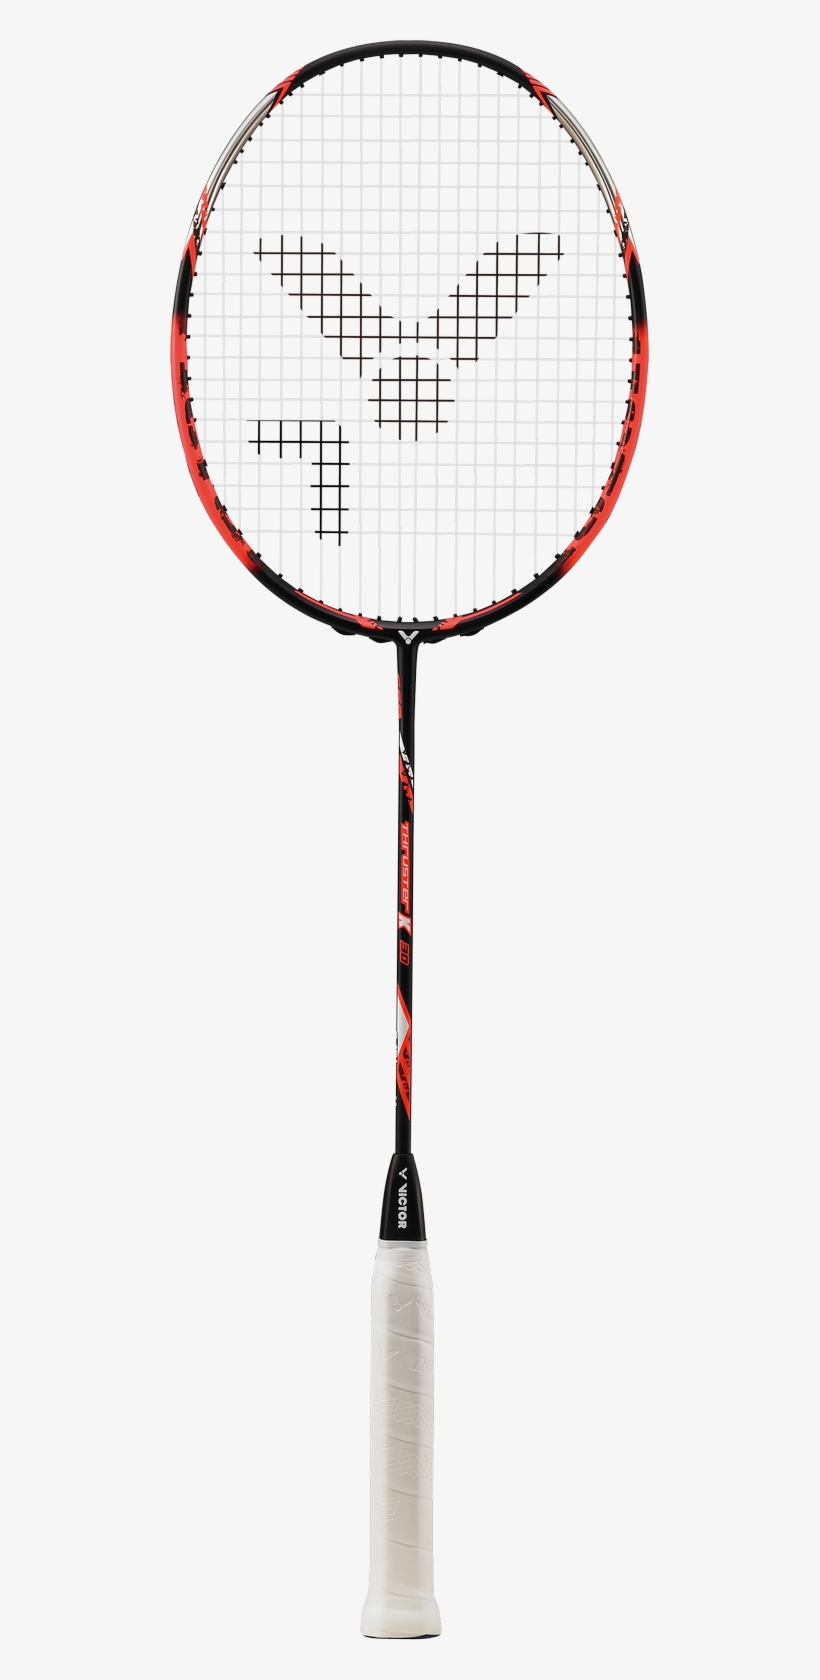 Victor Thruster K 30 Badminton Racket - Victor Thruster K 30 Badminton Racket - Black / Orange, transparent png #3219889